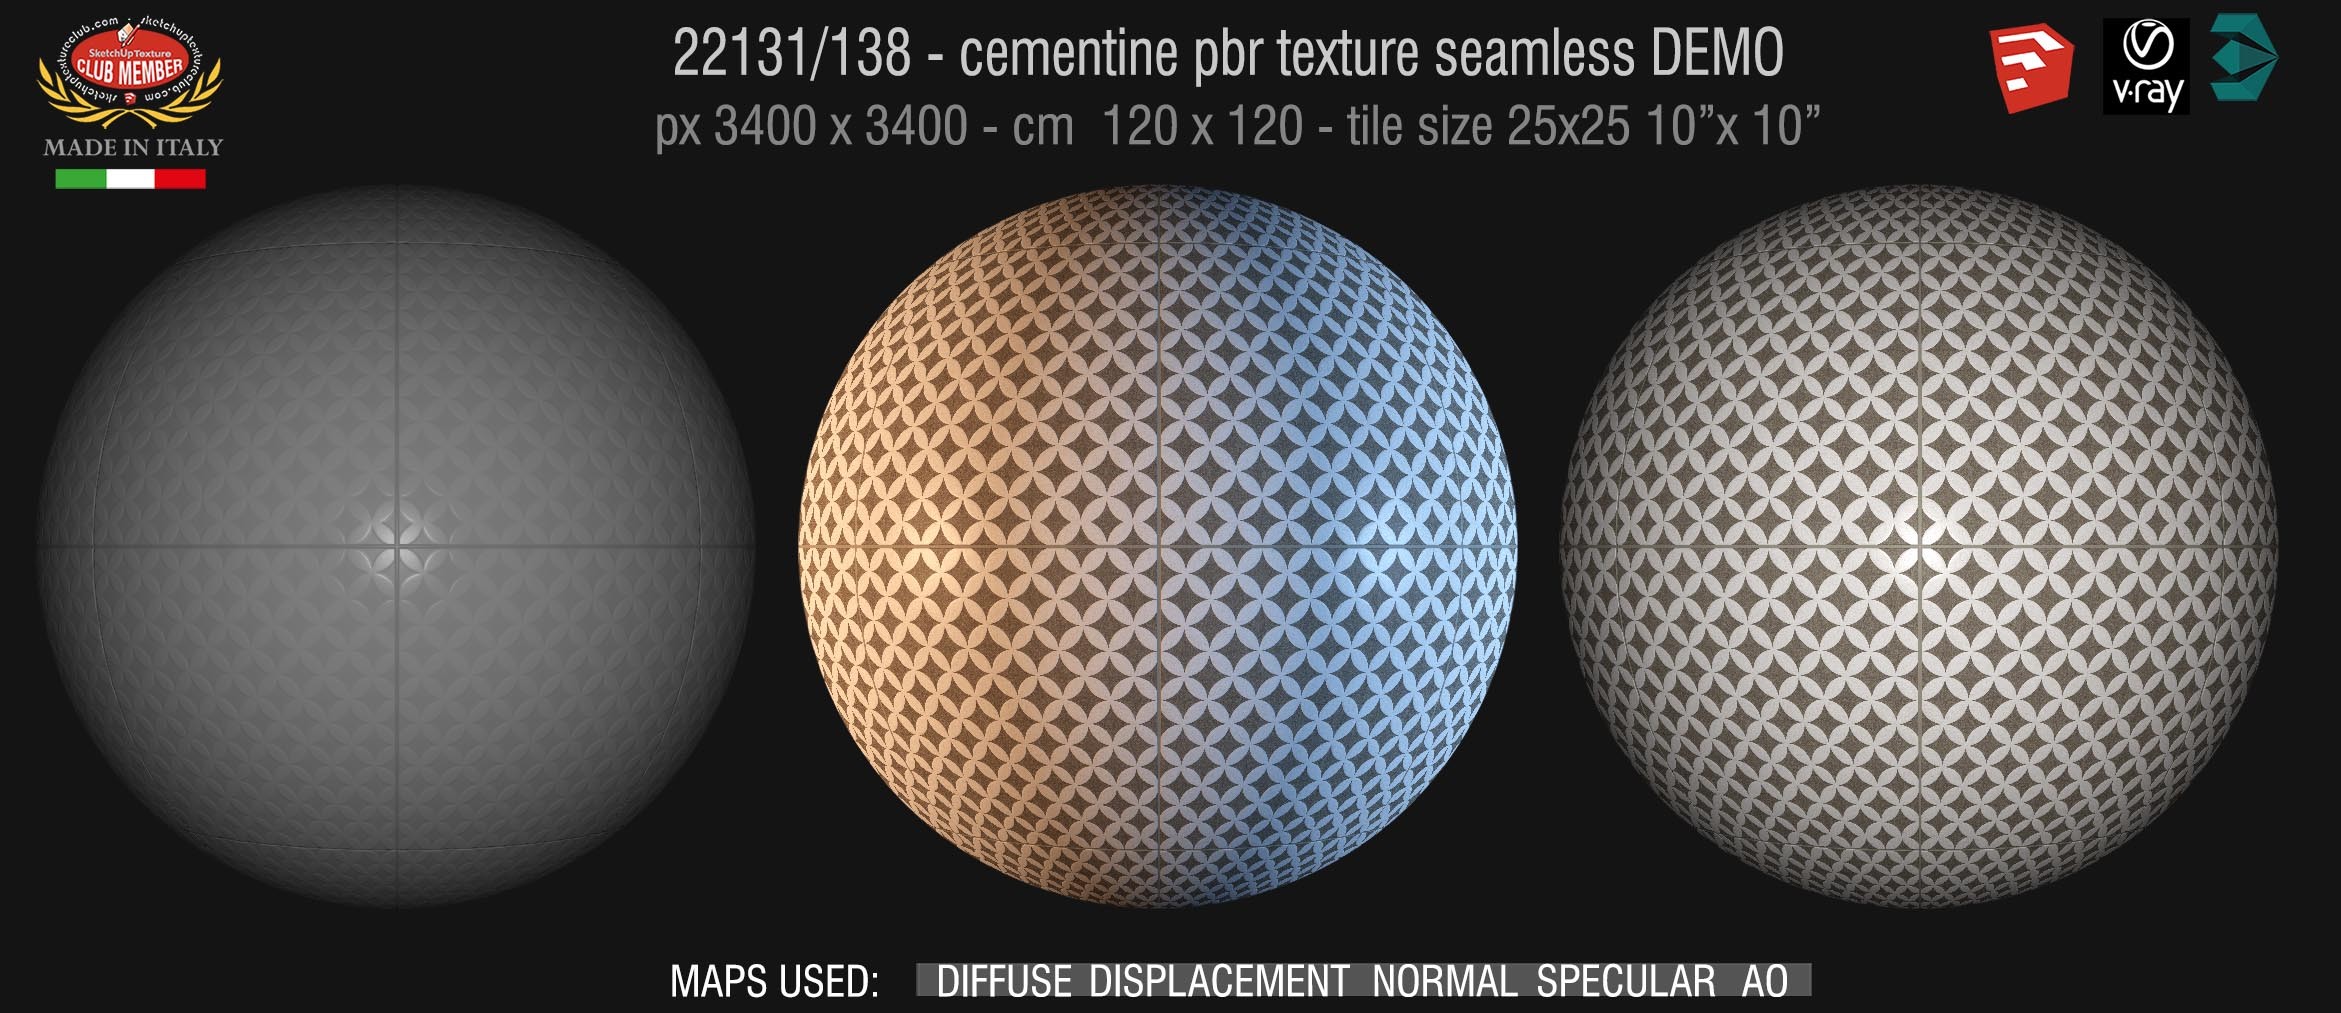 22131/138 cementine tiles Pbr seamless texture DEMO - porcelain stoneware concrete look